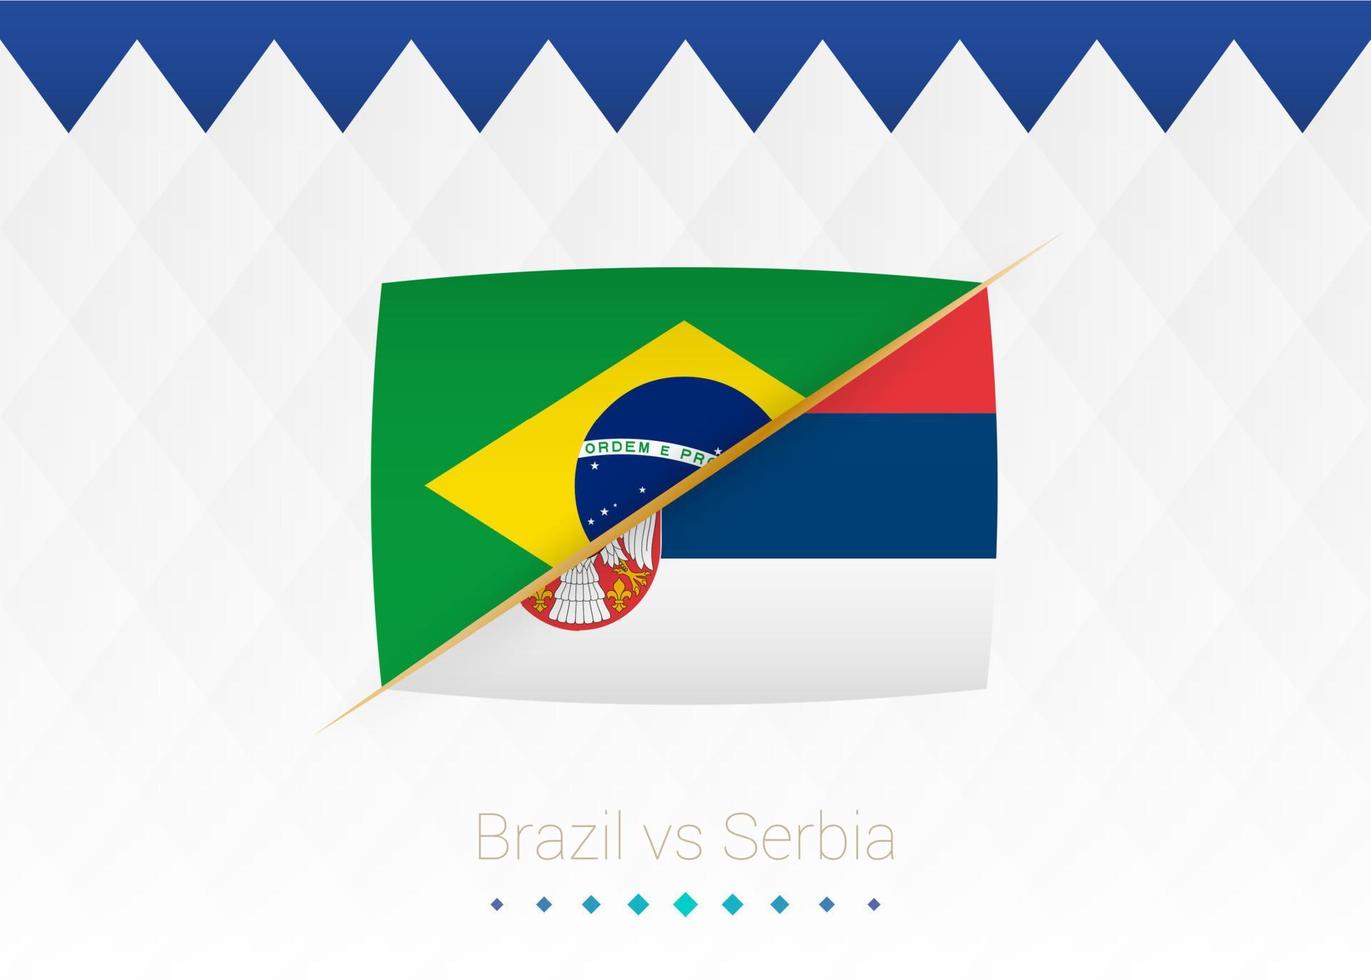 National football team Brazil vs Serbia. Soccer 2022 match versus icon. vector